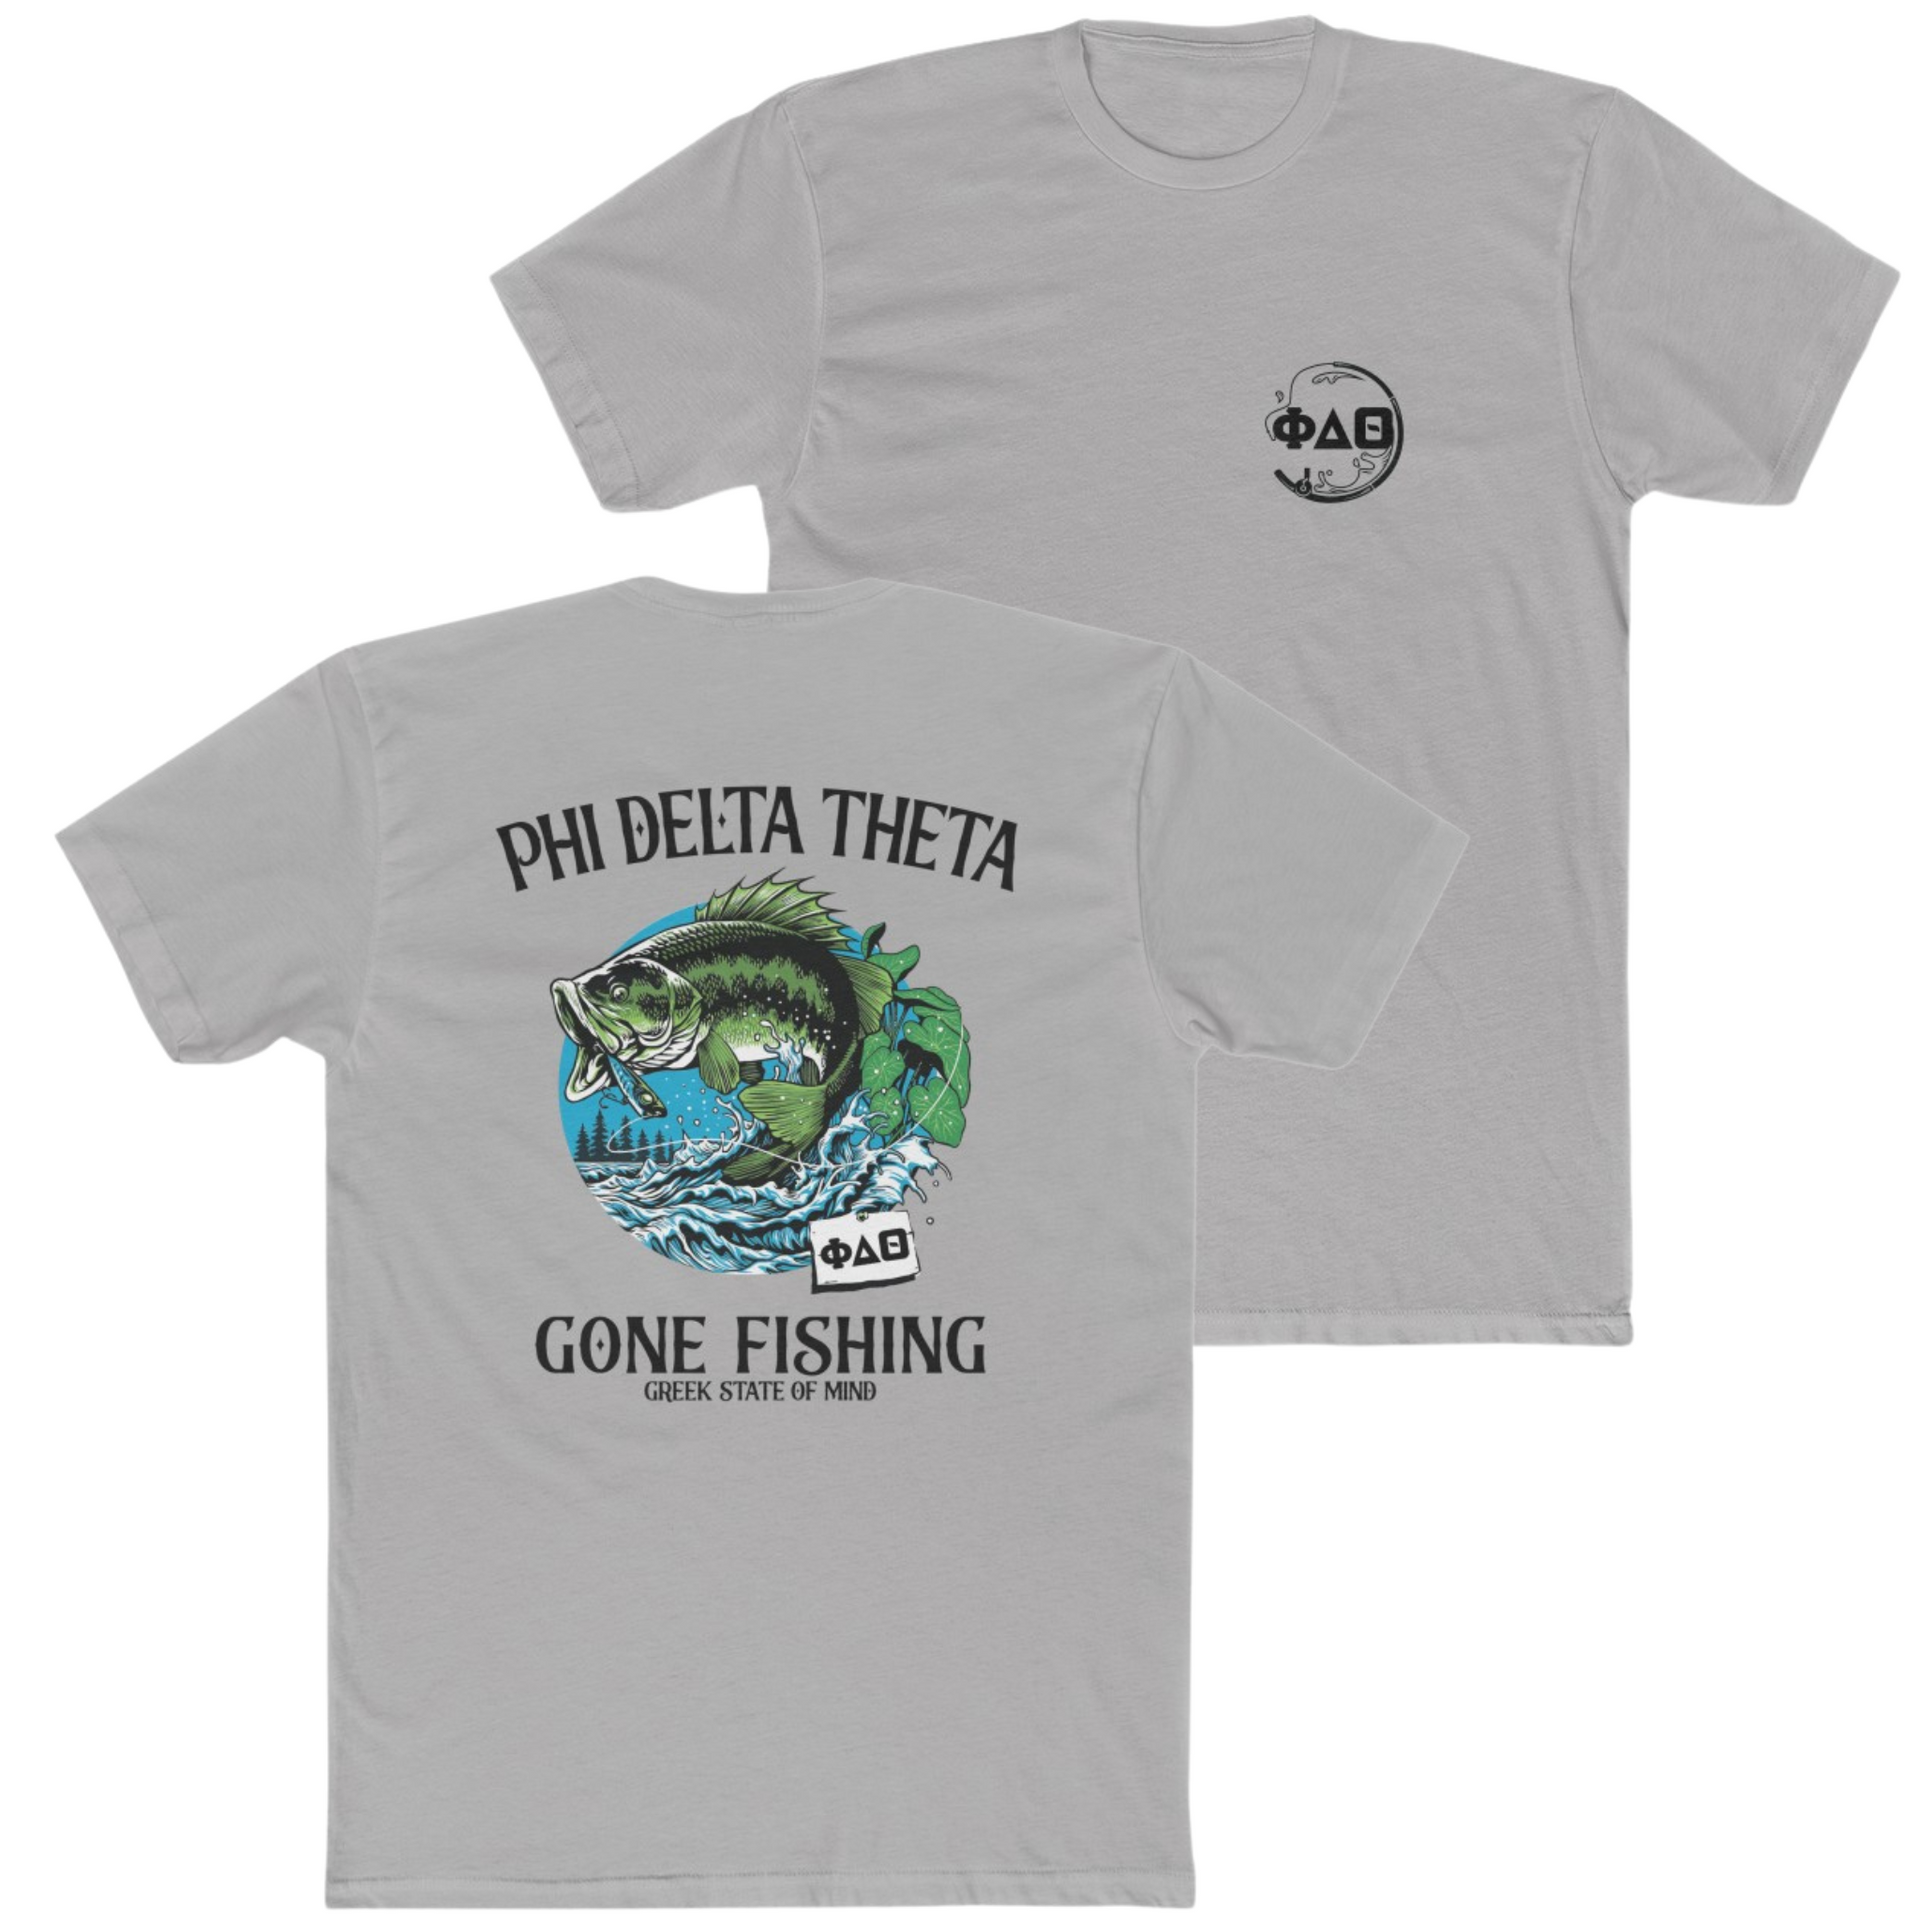 grey Phi Delta Theta Graphic T-Shirt | Gone Fishing | phi delta theta fraternity greek apparel 